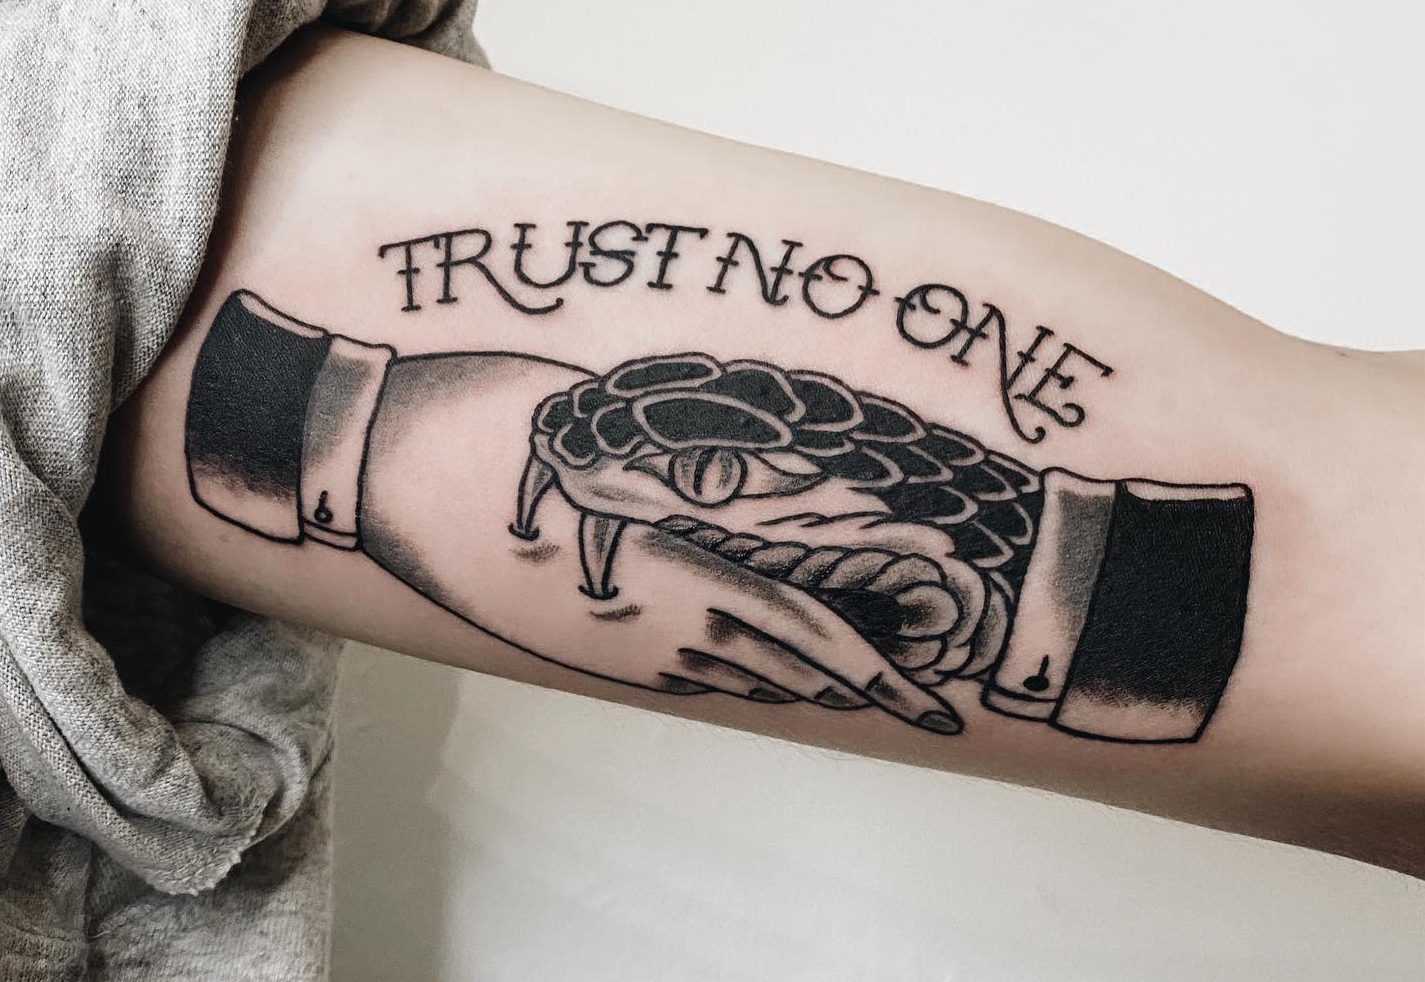 arm trust no one tattoos mic.ink